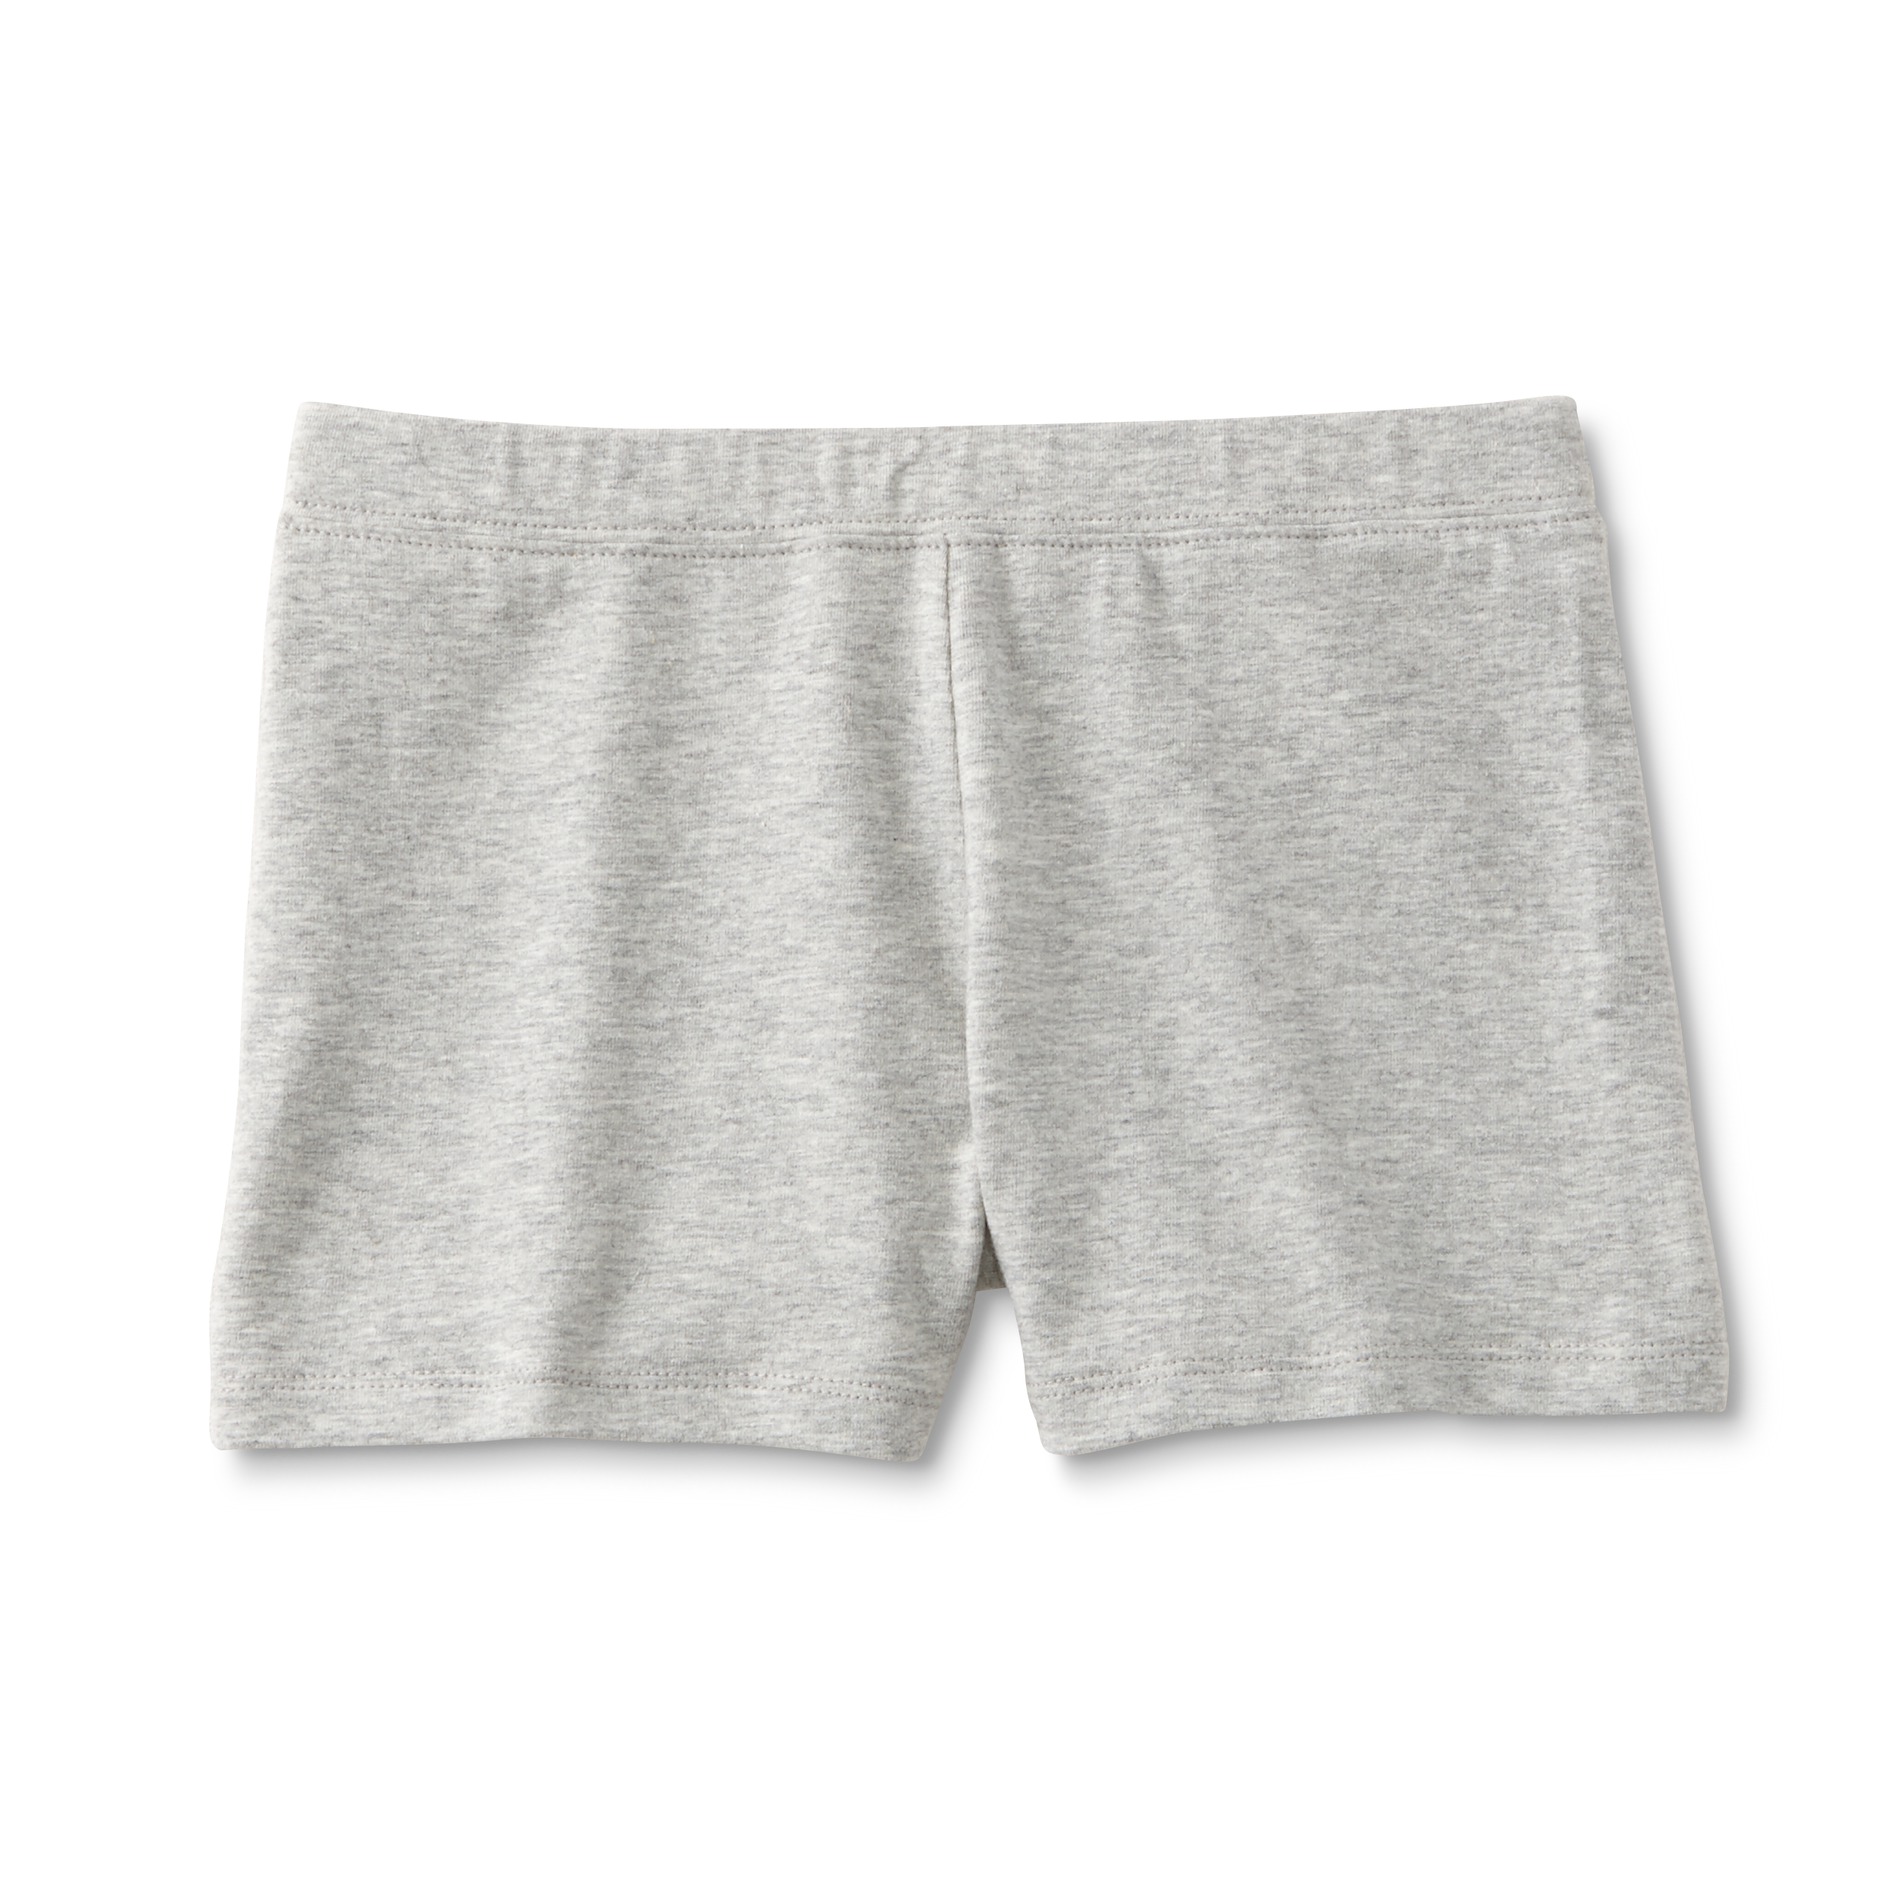 Basic Editions Girl's Knit Shorts